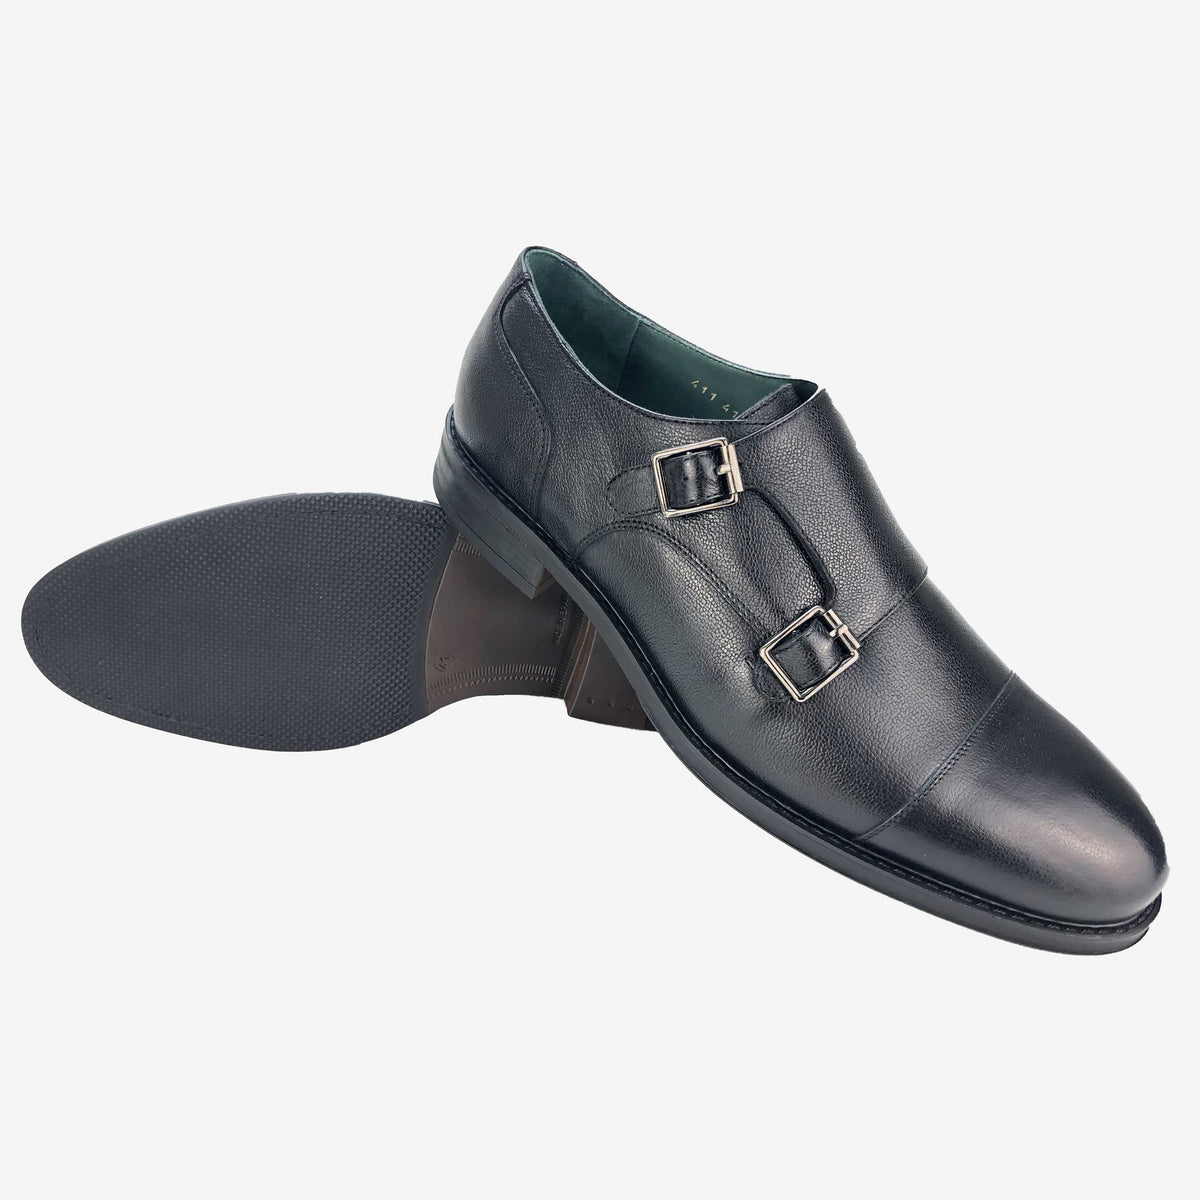 CH411-019  - Chaussure Cuir Noir - deluxe-maroc